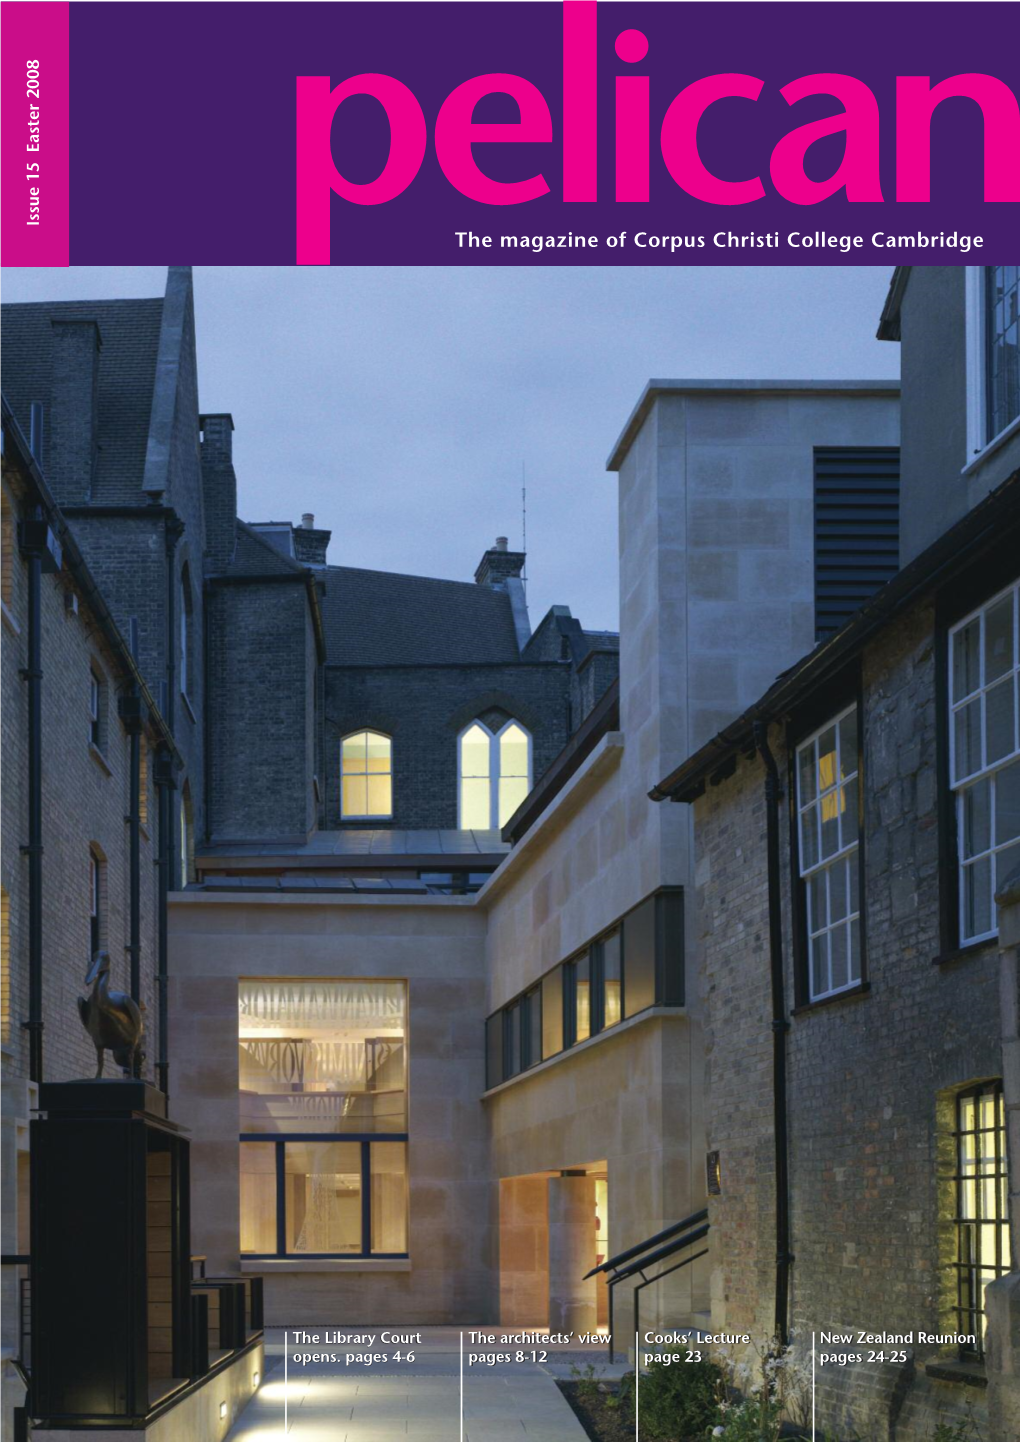 The Magazine of Corpus Christi College Cambridge